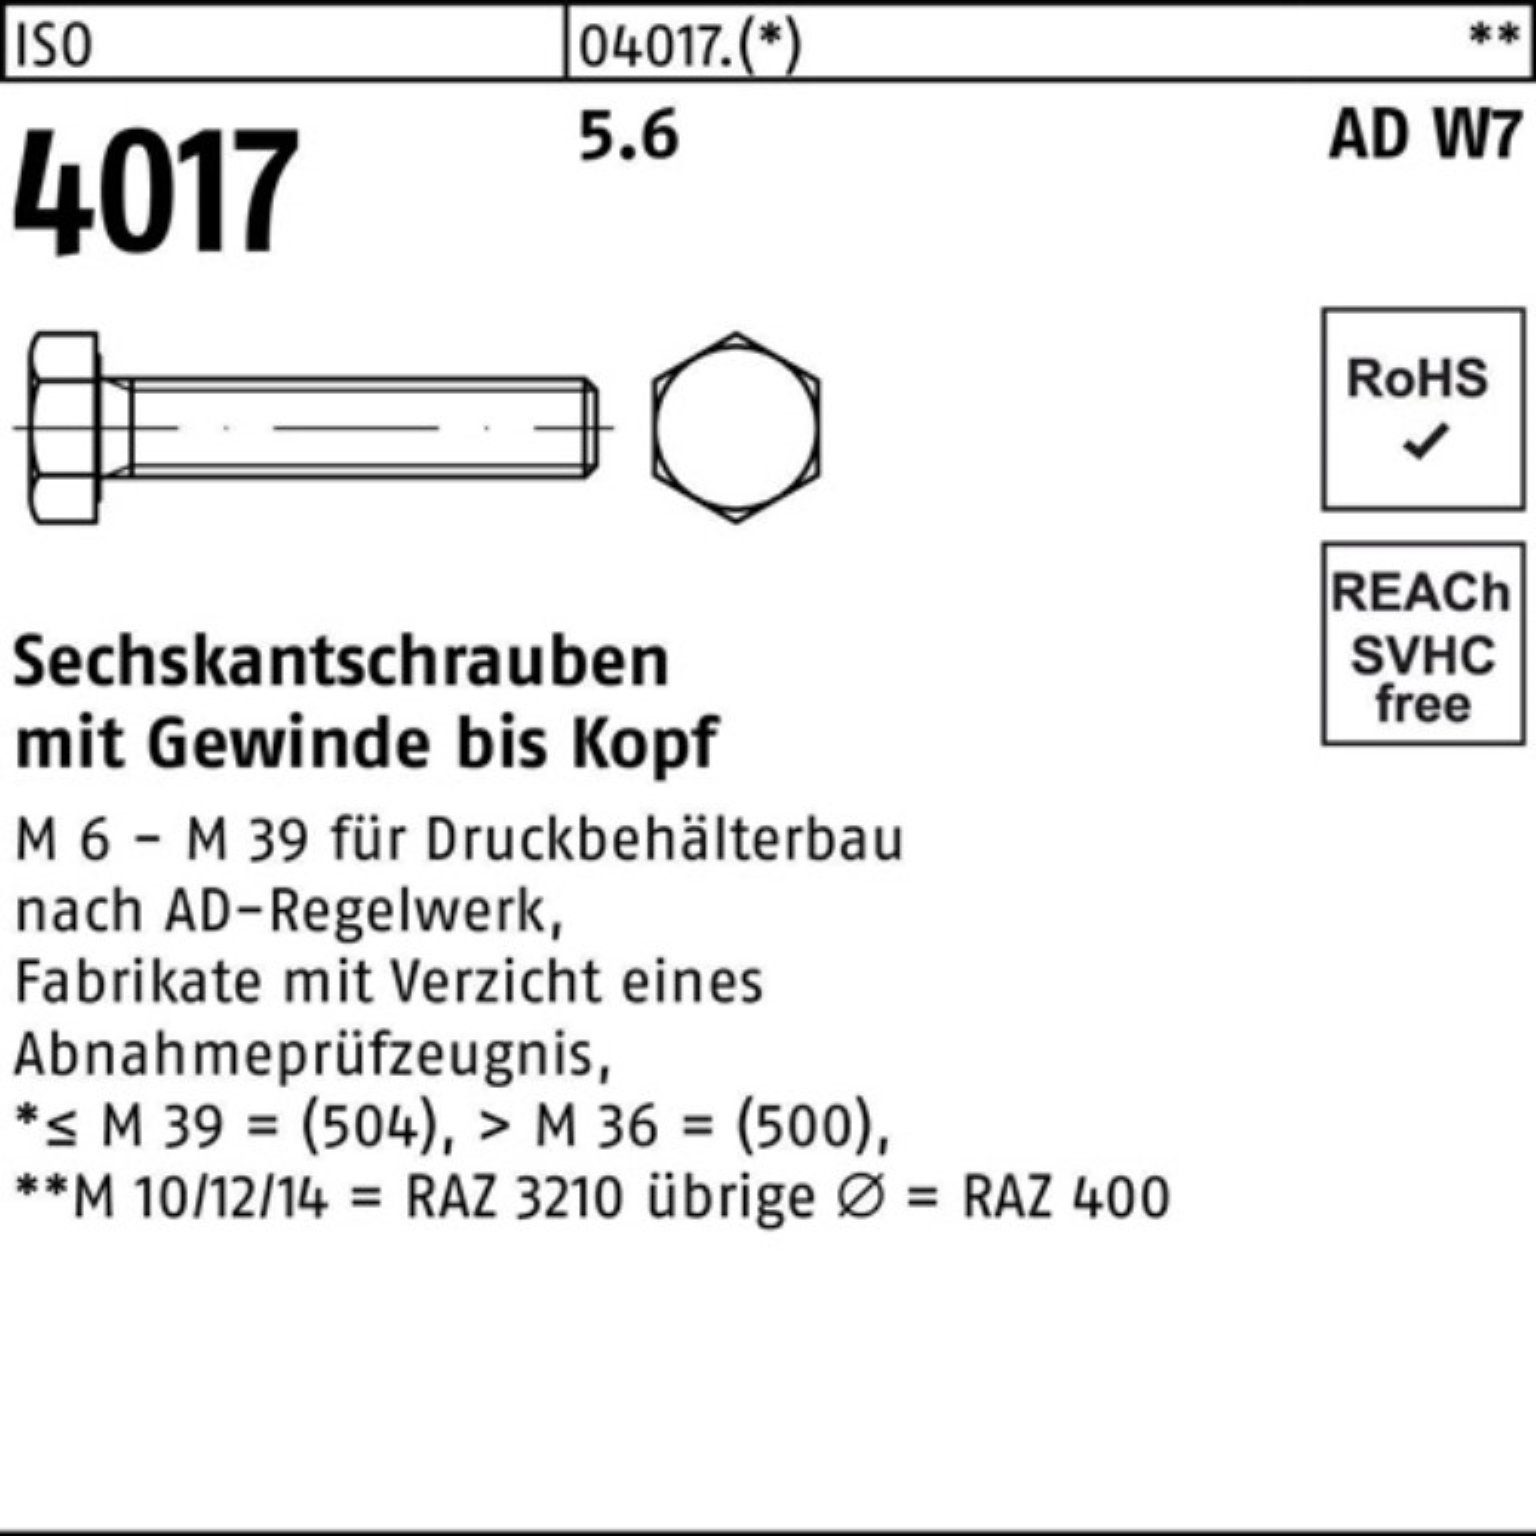 VG Pack Sechskantschraube ISO W7 Sechskantschraube Bufab AD 5.6 110 100er 4017 Stück 50 M12x